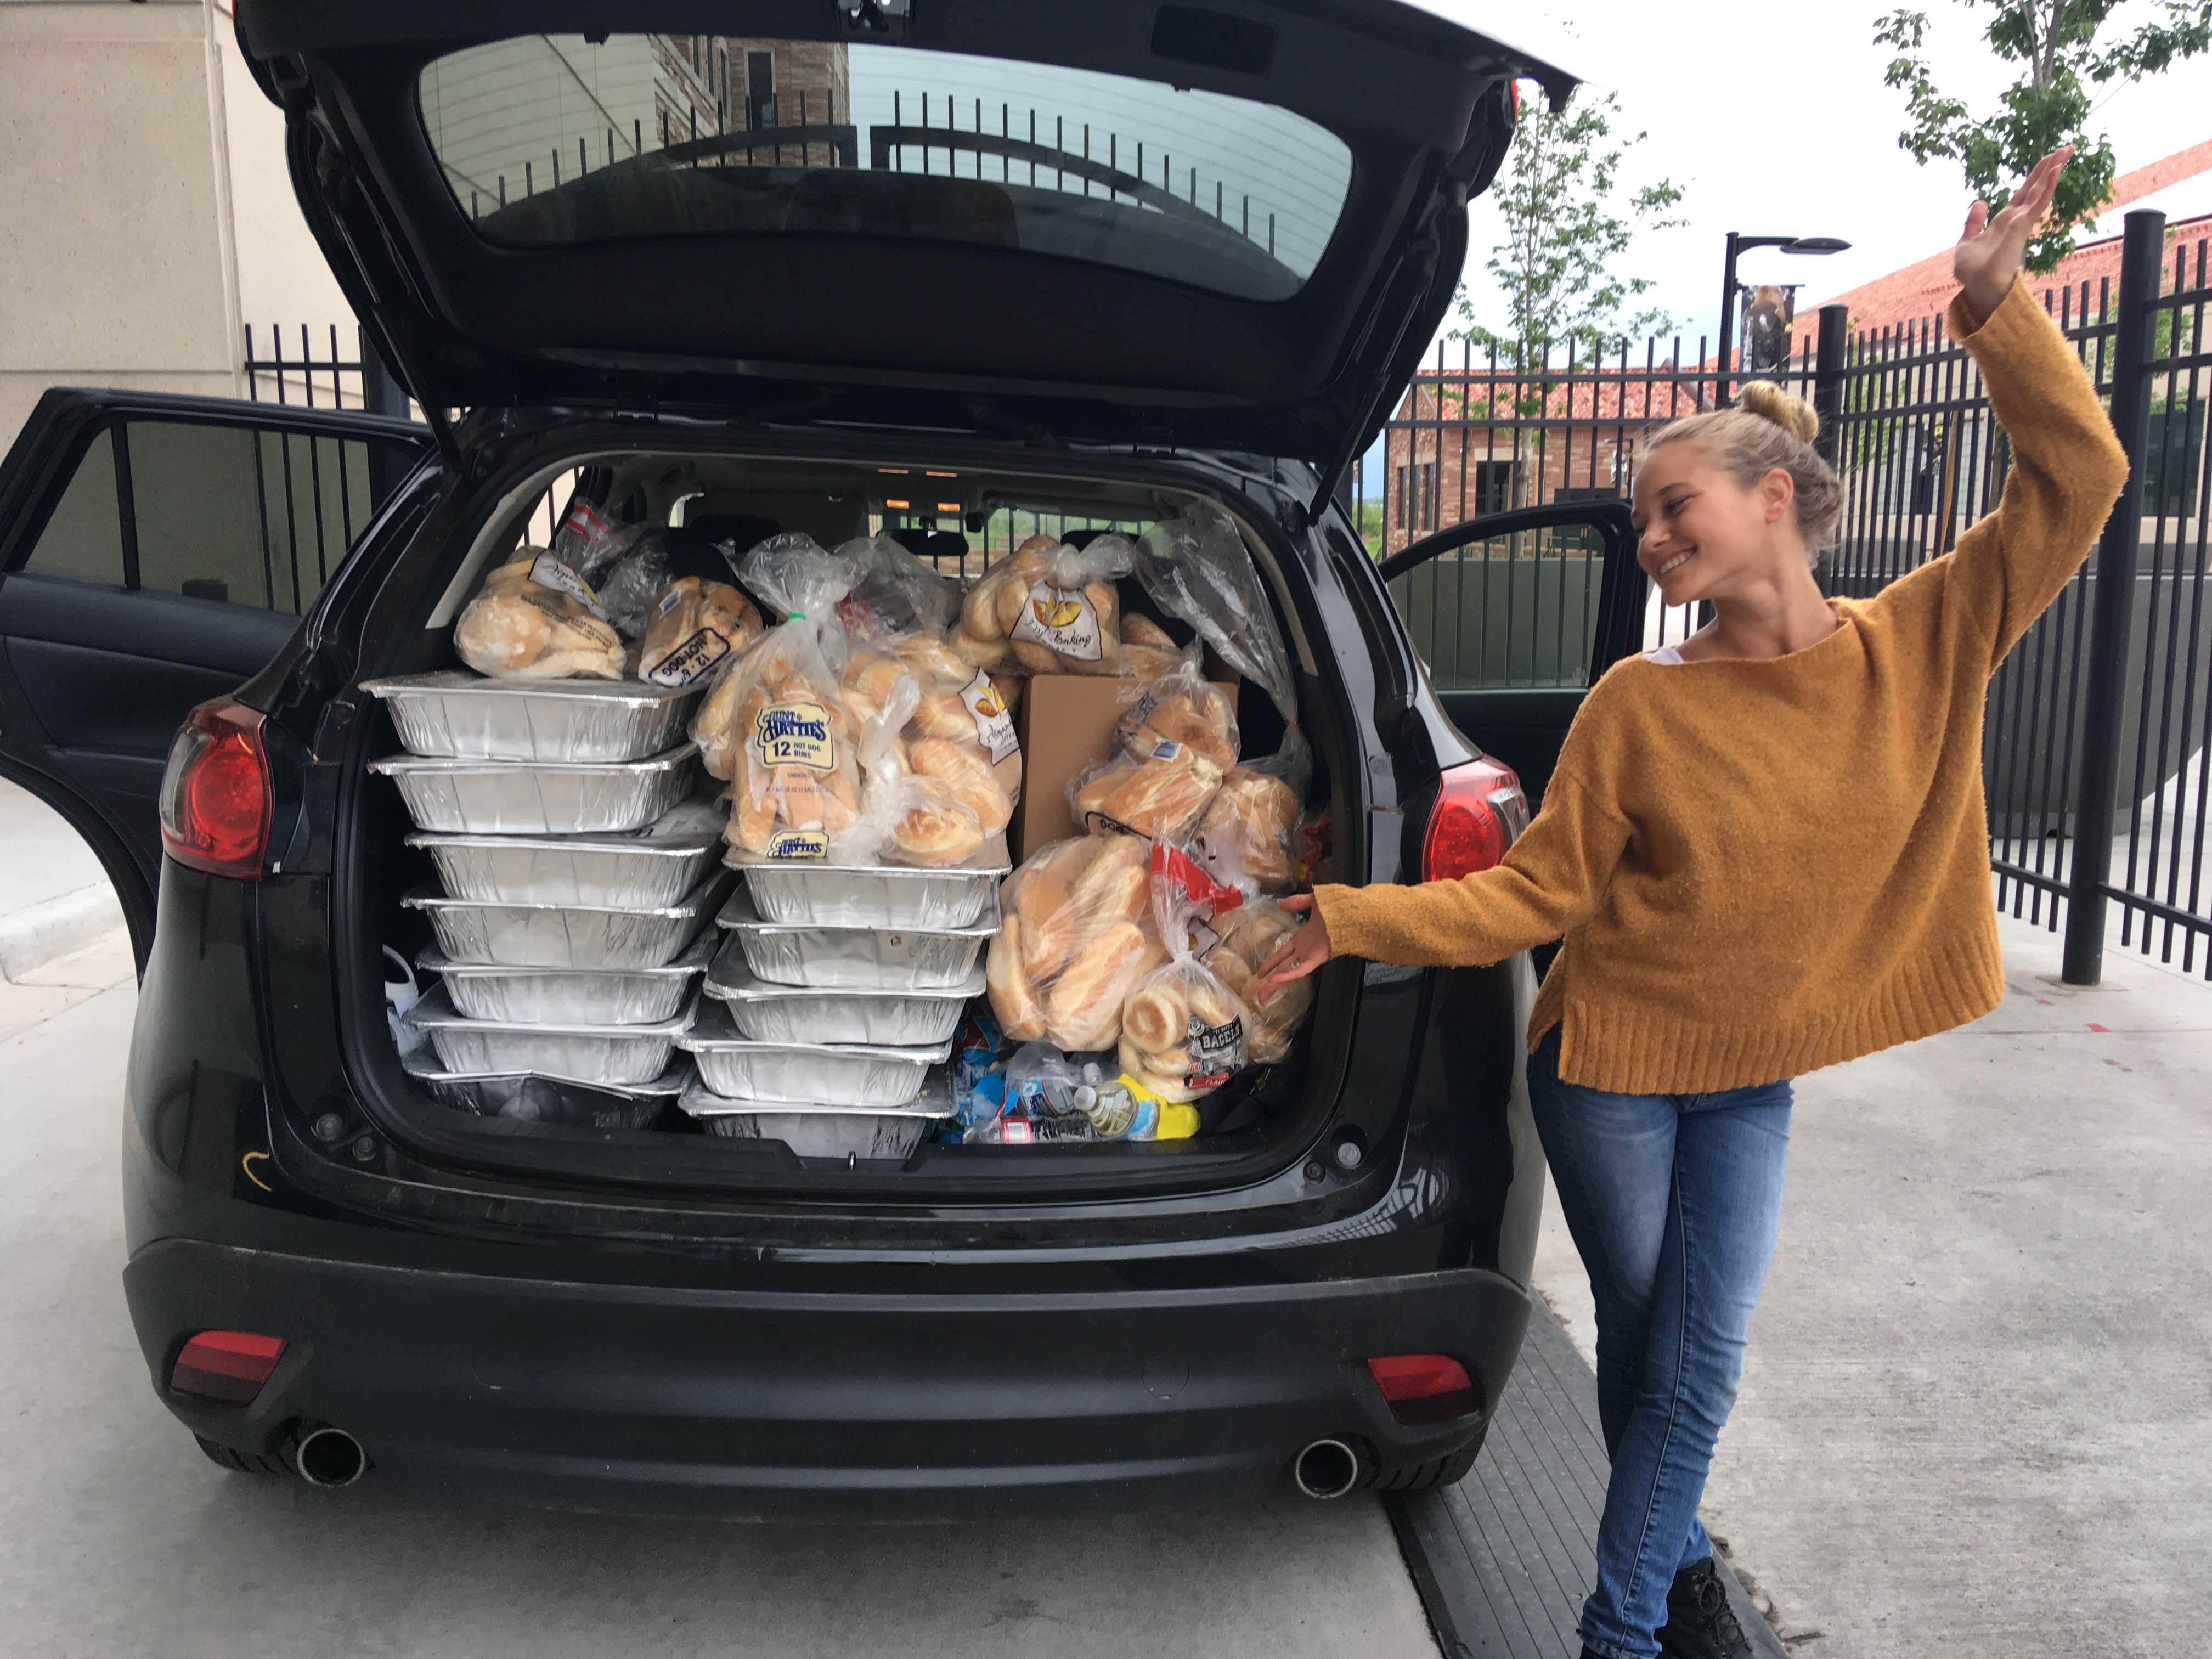 Rwu Car Full Of Donated Food